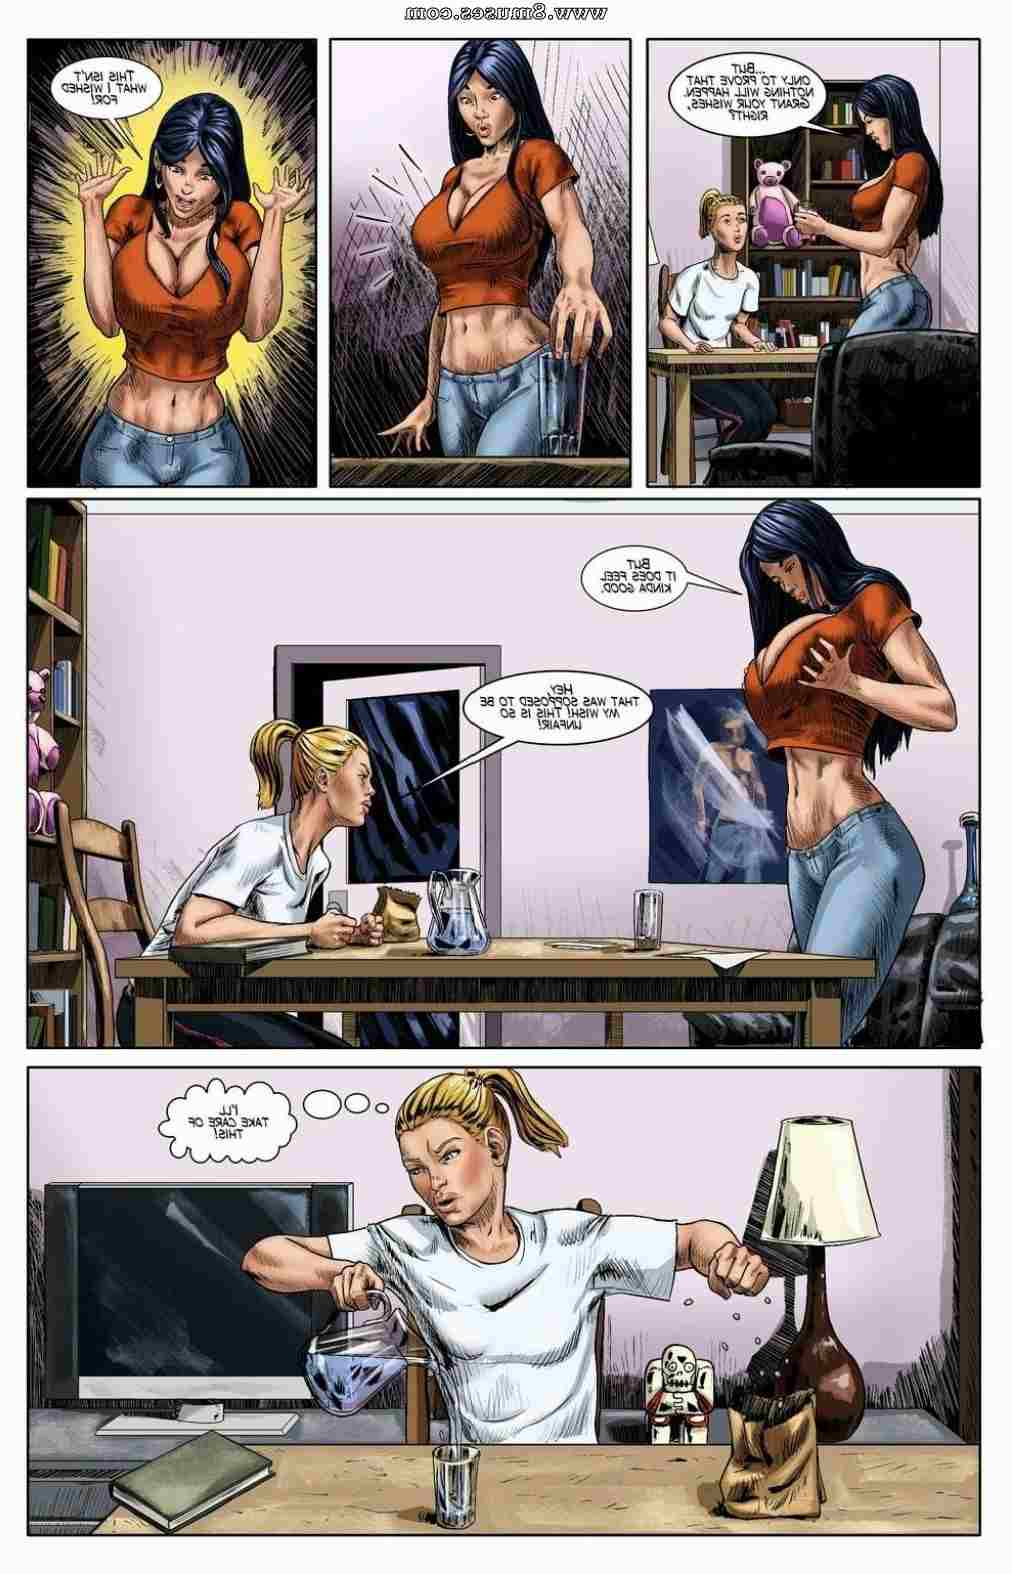 BE-Story-Club-Comics/Sams-Desires Sams_Desires__8muses_-_Sex_and_Porn_Comics_7.jpg